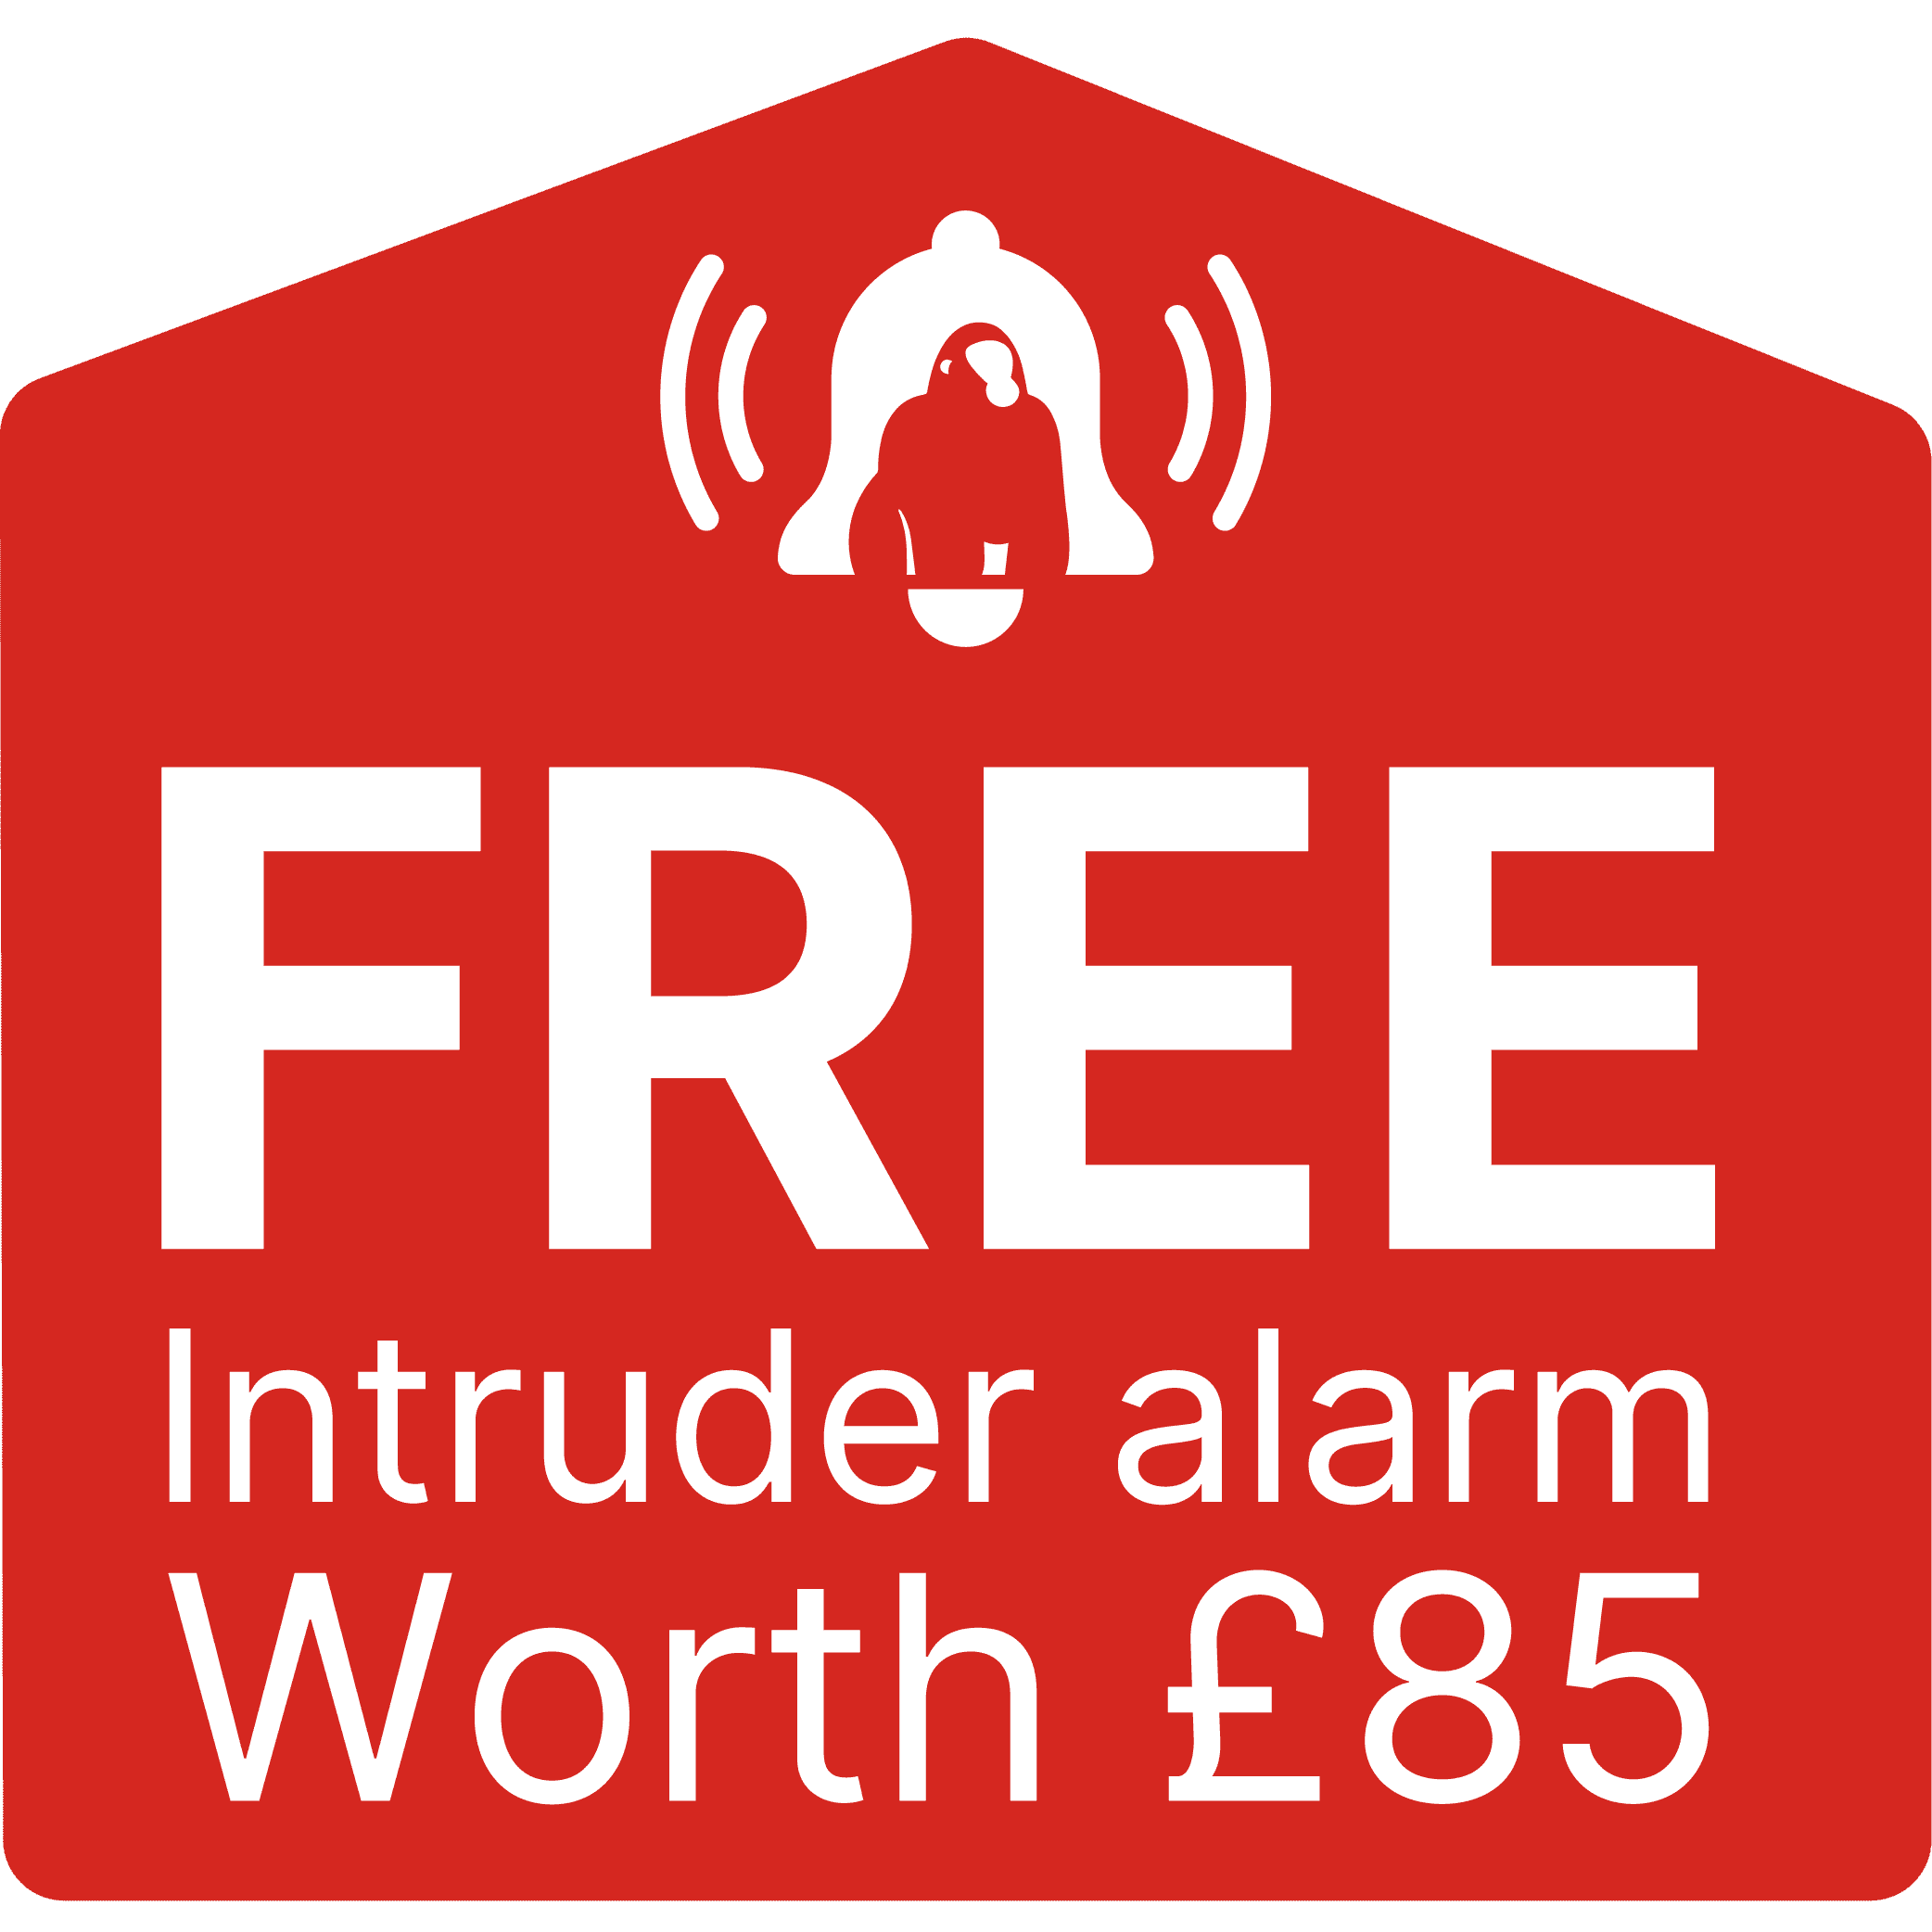 Free Intruder alarm worth £85